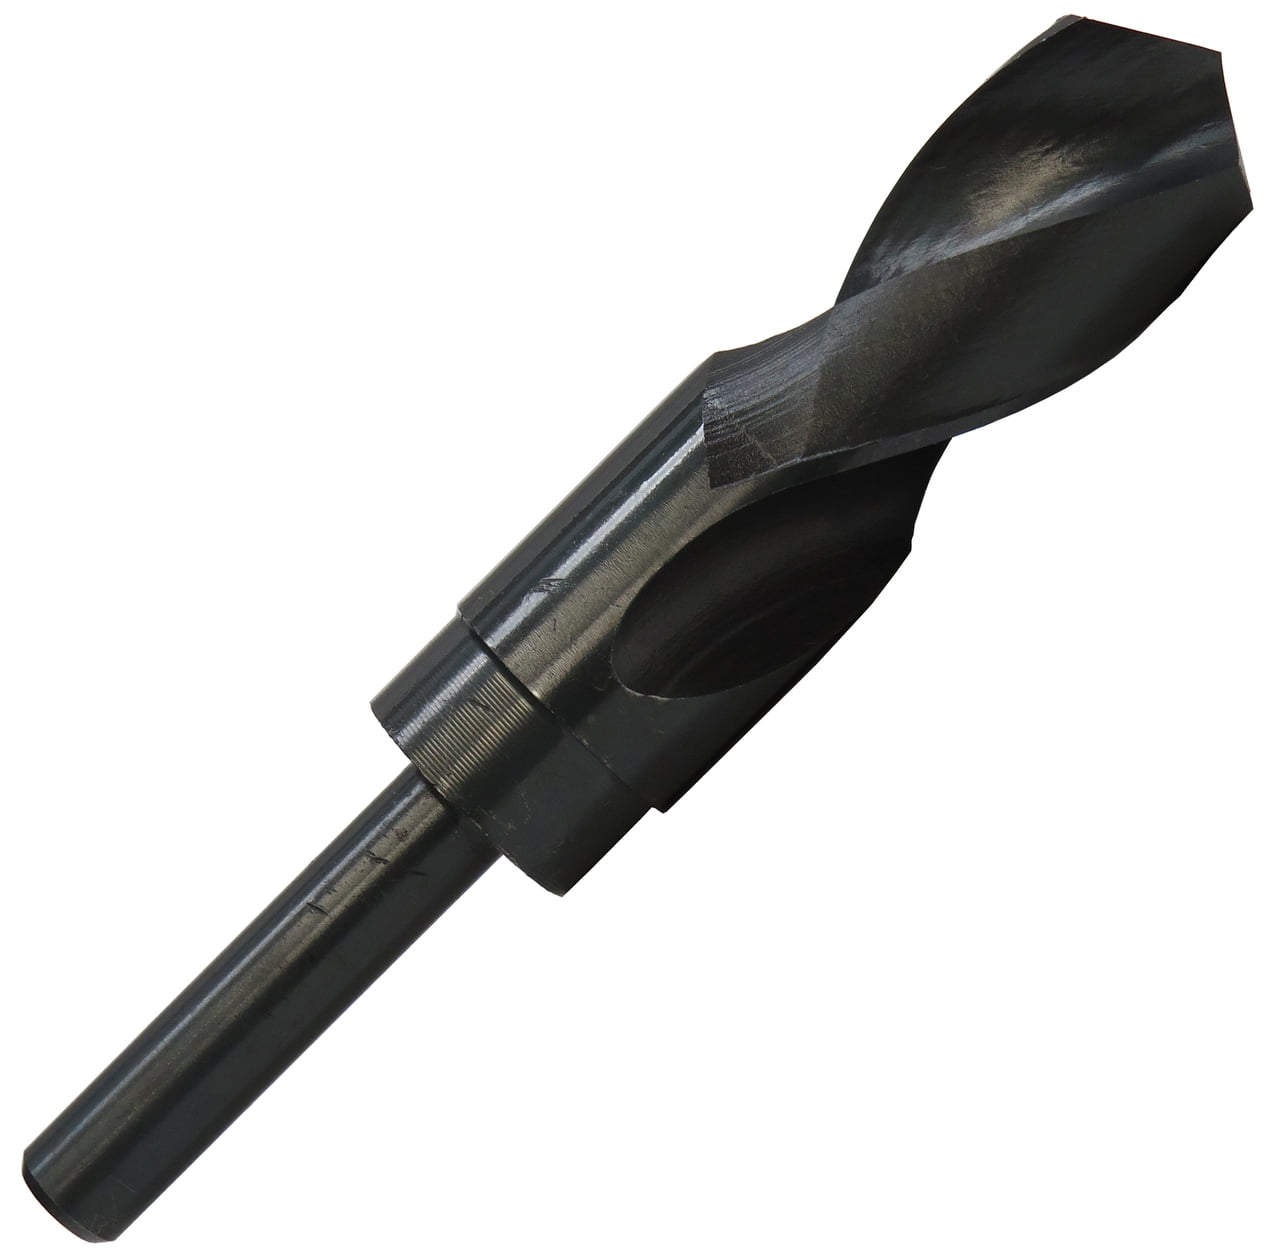 31/32" WESTWARD Drill Bit Reduced Shank High Speed Steel Metal Cutting Black NEW 